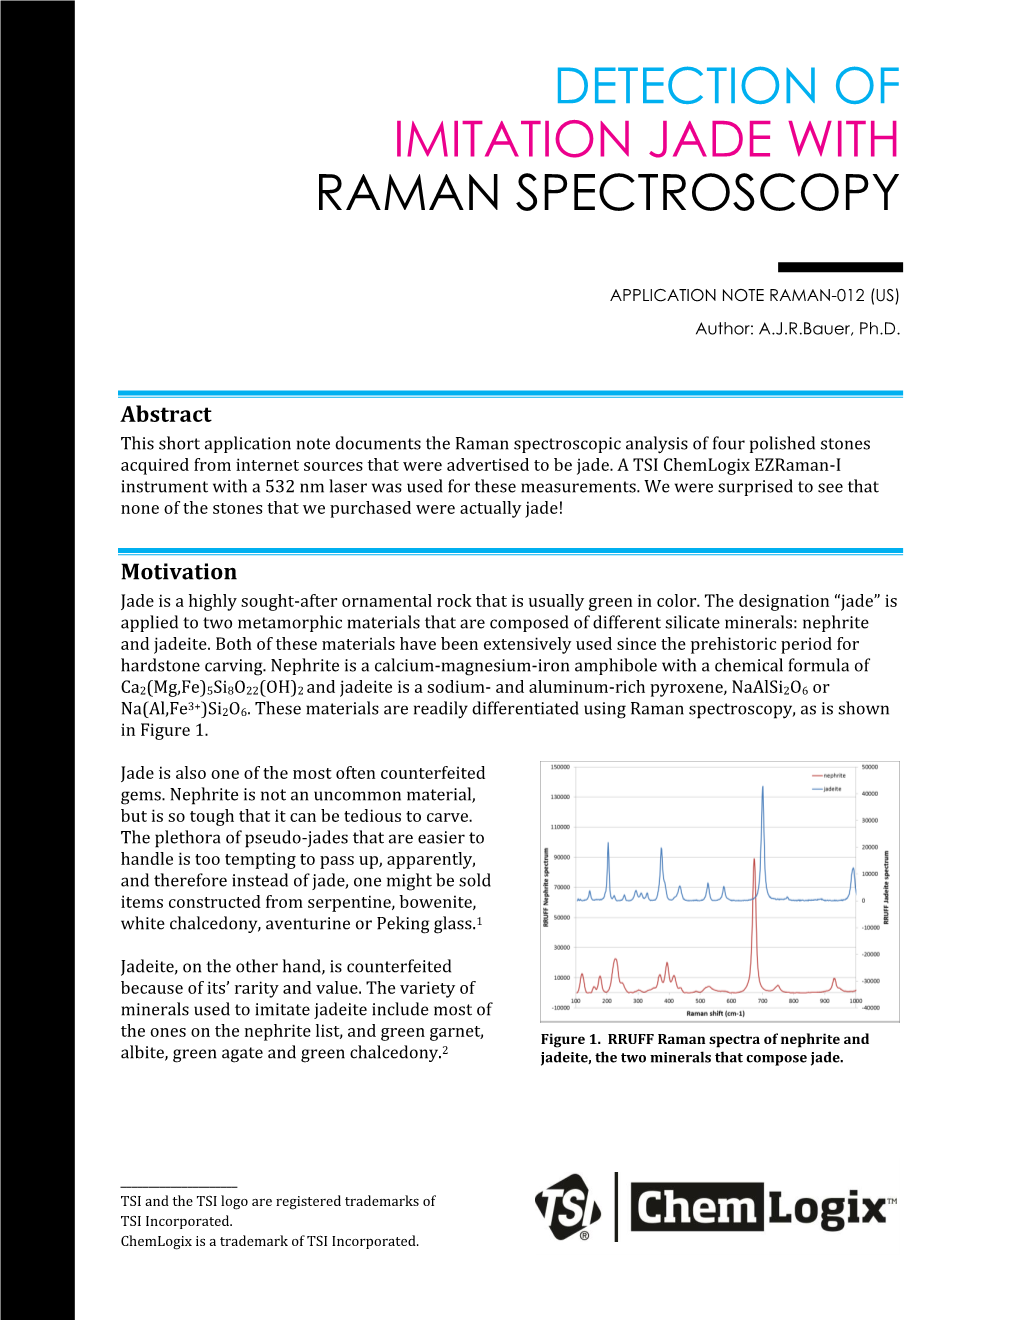 Detection of Imitation Jade with Raman Spectroscopy App Note